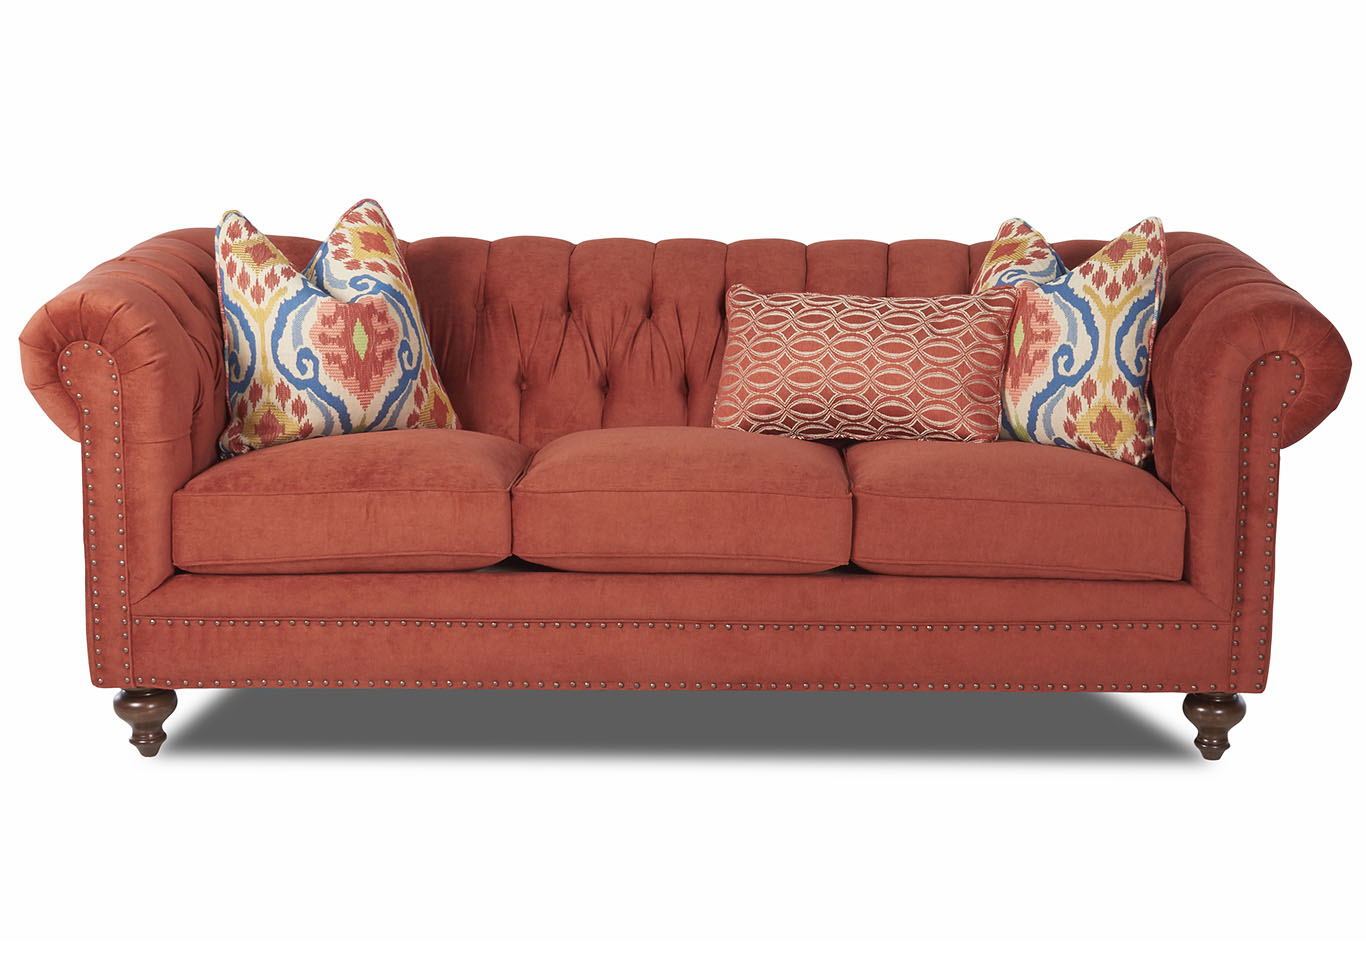 Charlotte Paris Russet Stationary Fabric Sofa,Klaussner Home Furnishings